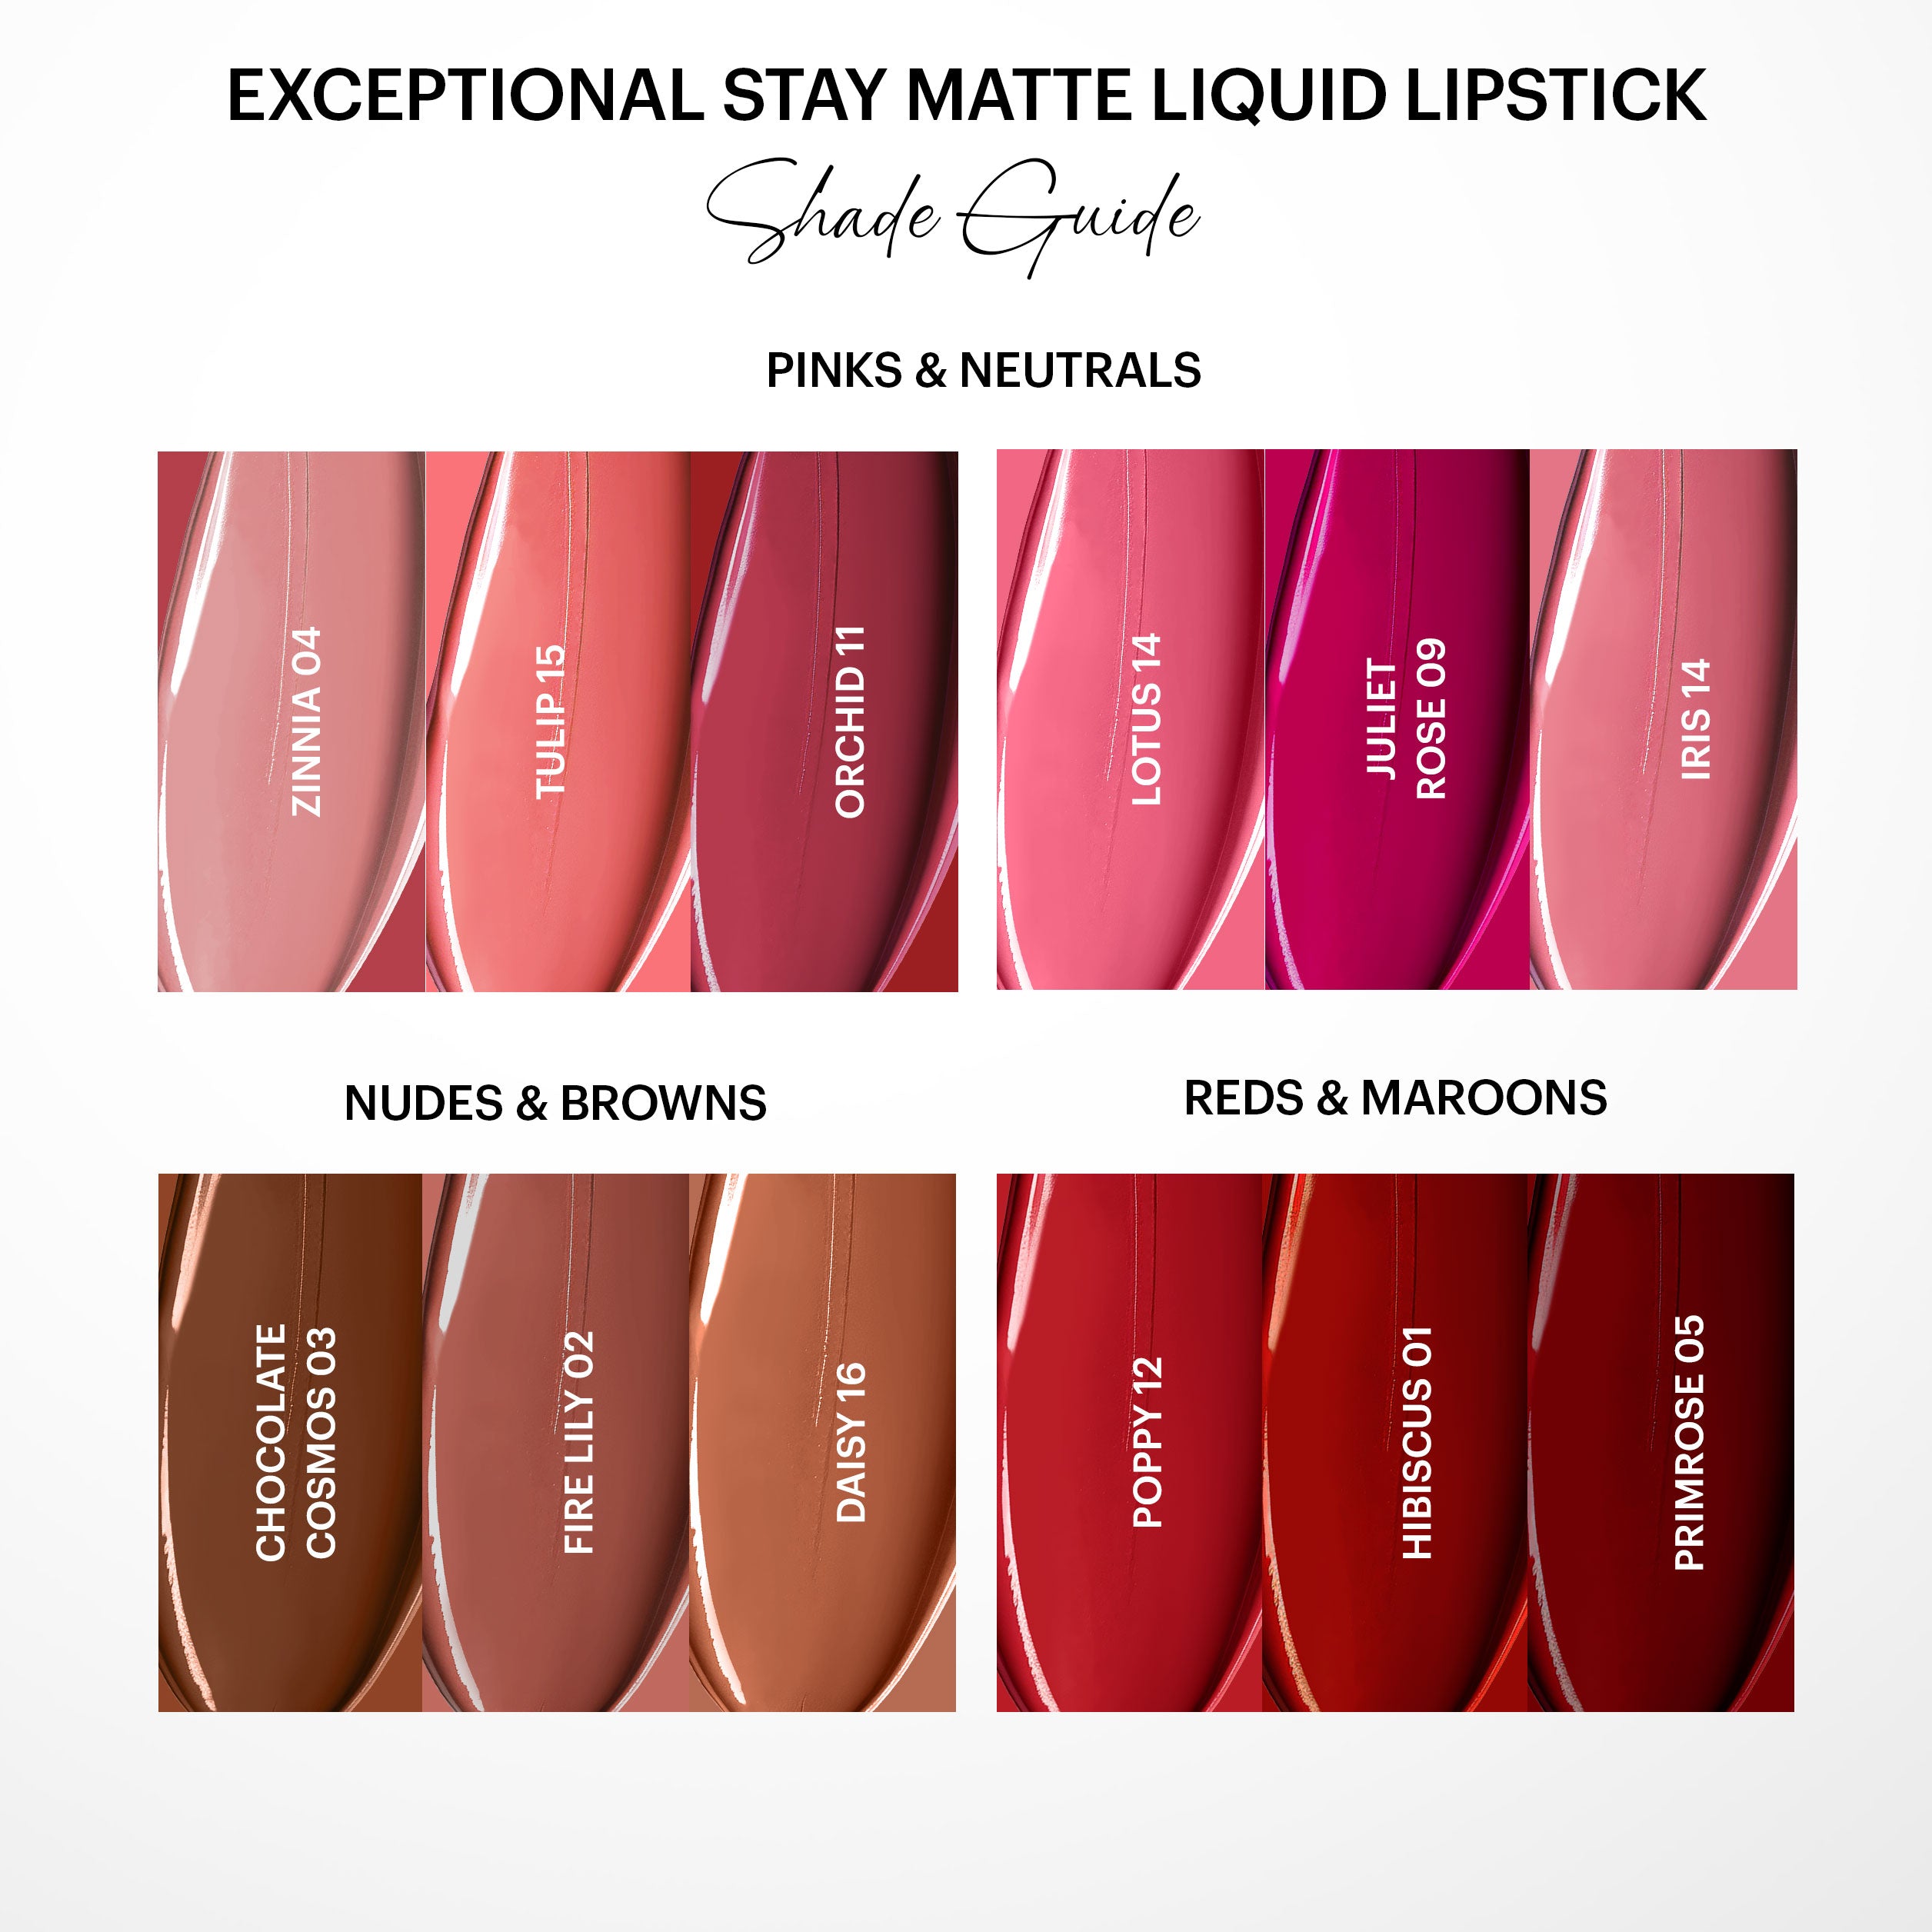 Exceptional Stay Matte Liquid Lipstick Shade: Tulip 15